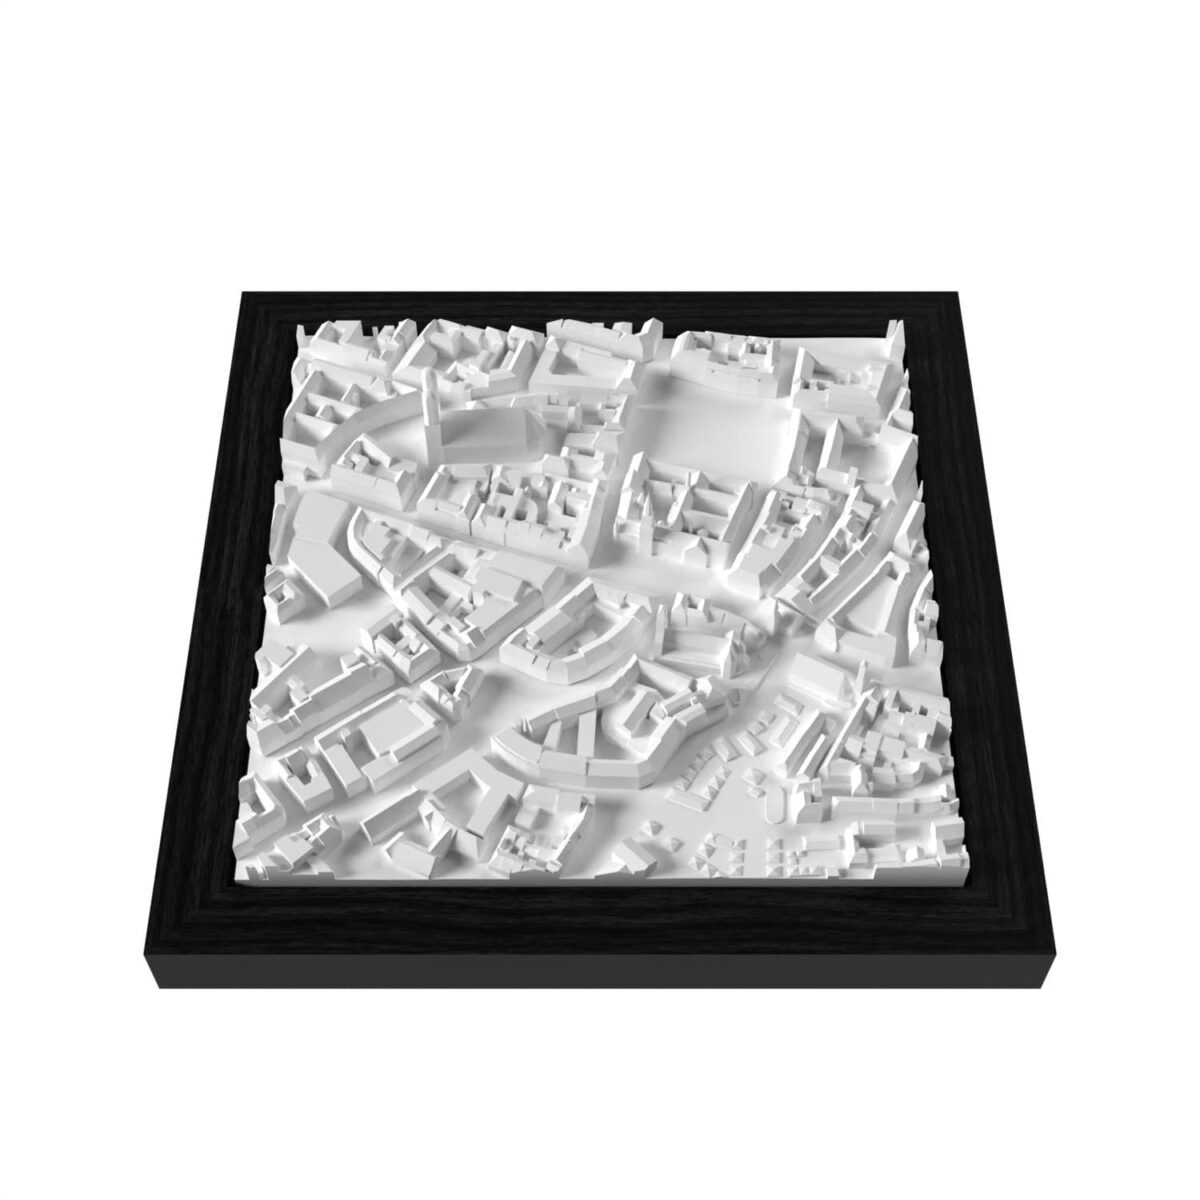 Daedalus Designs - Cityframes Munich 3D City Map Sculpture - Review